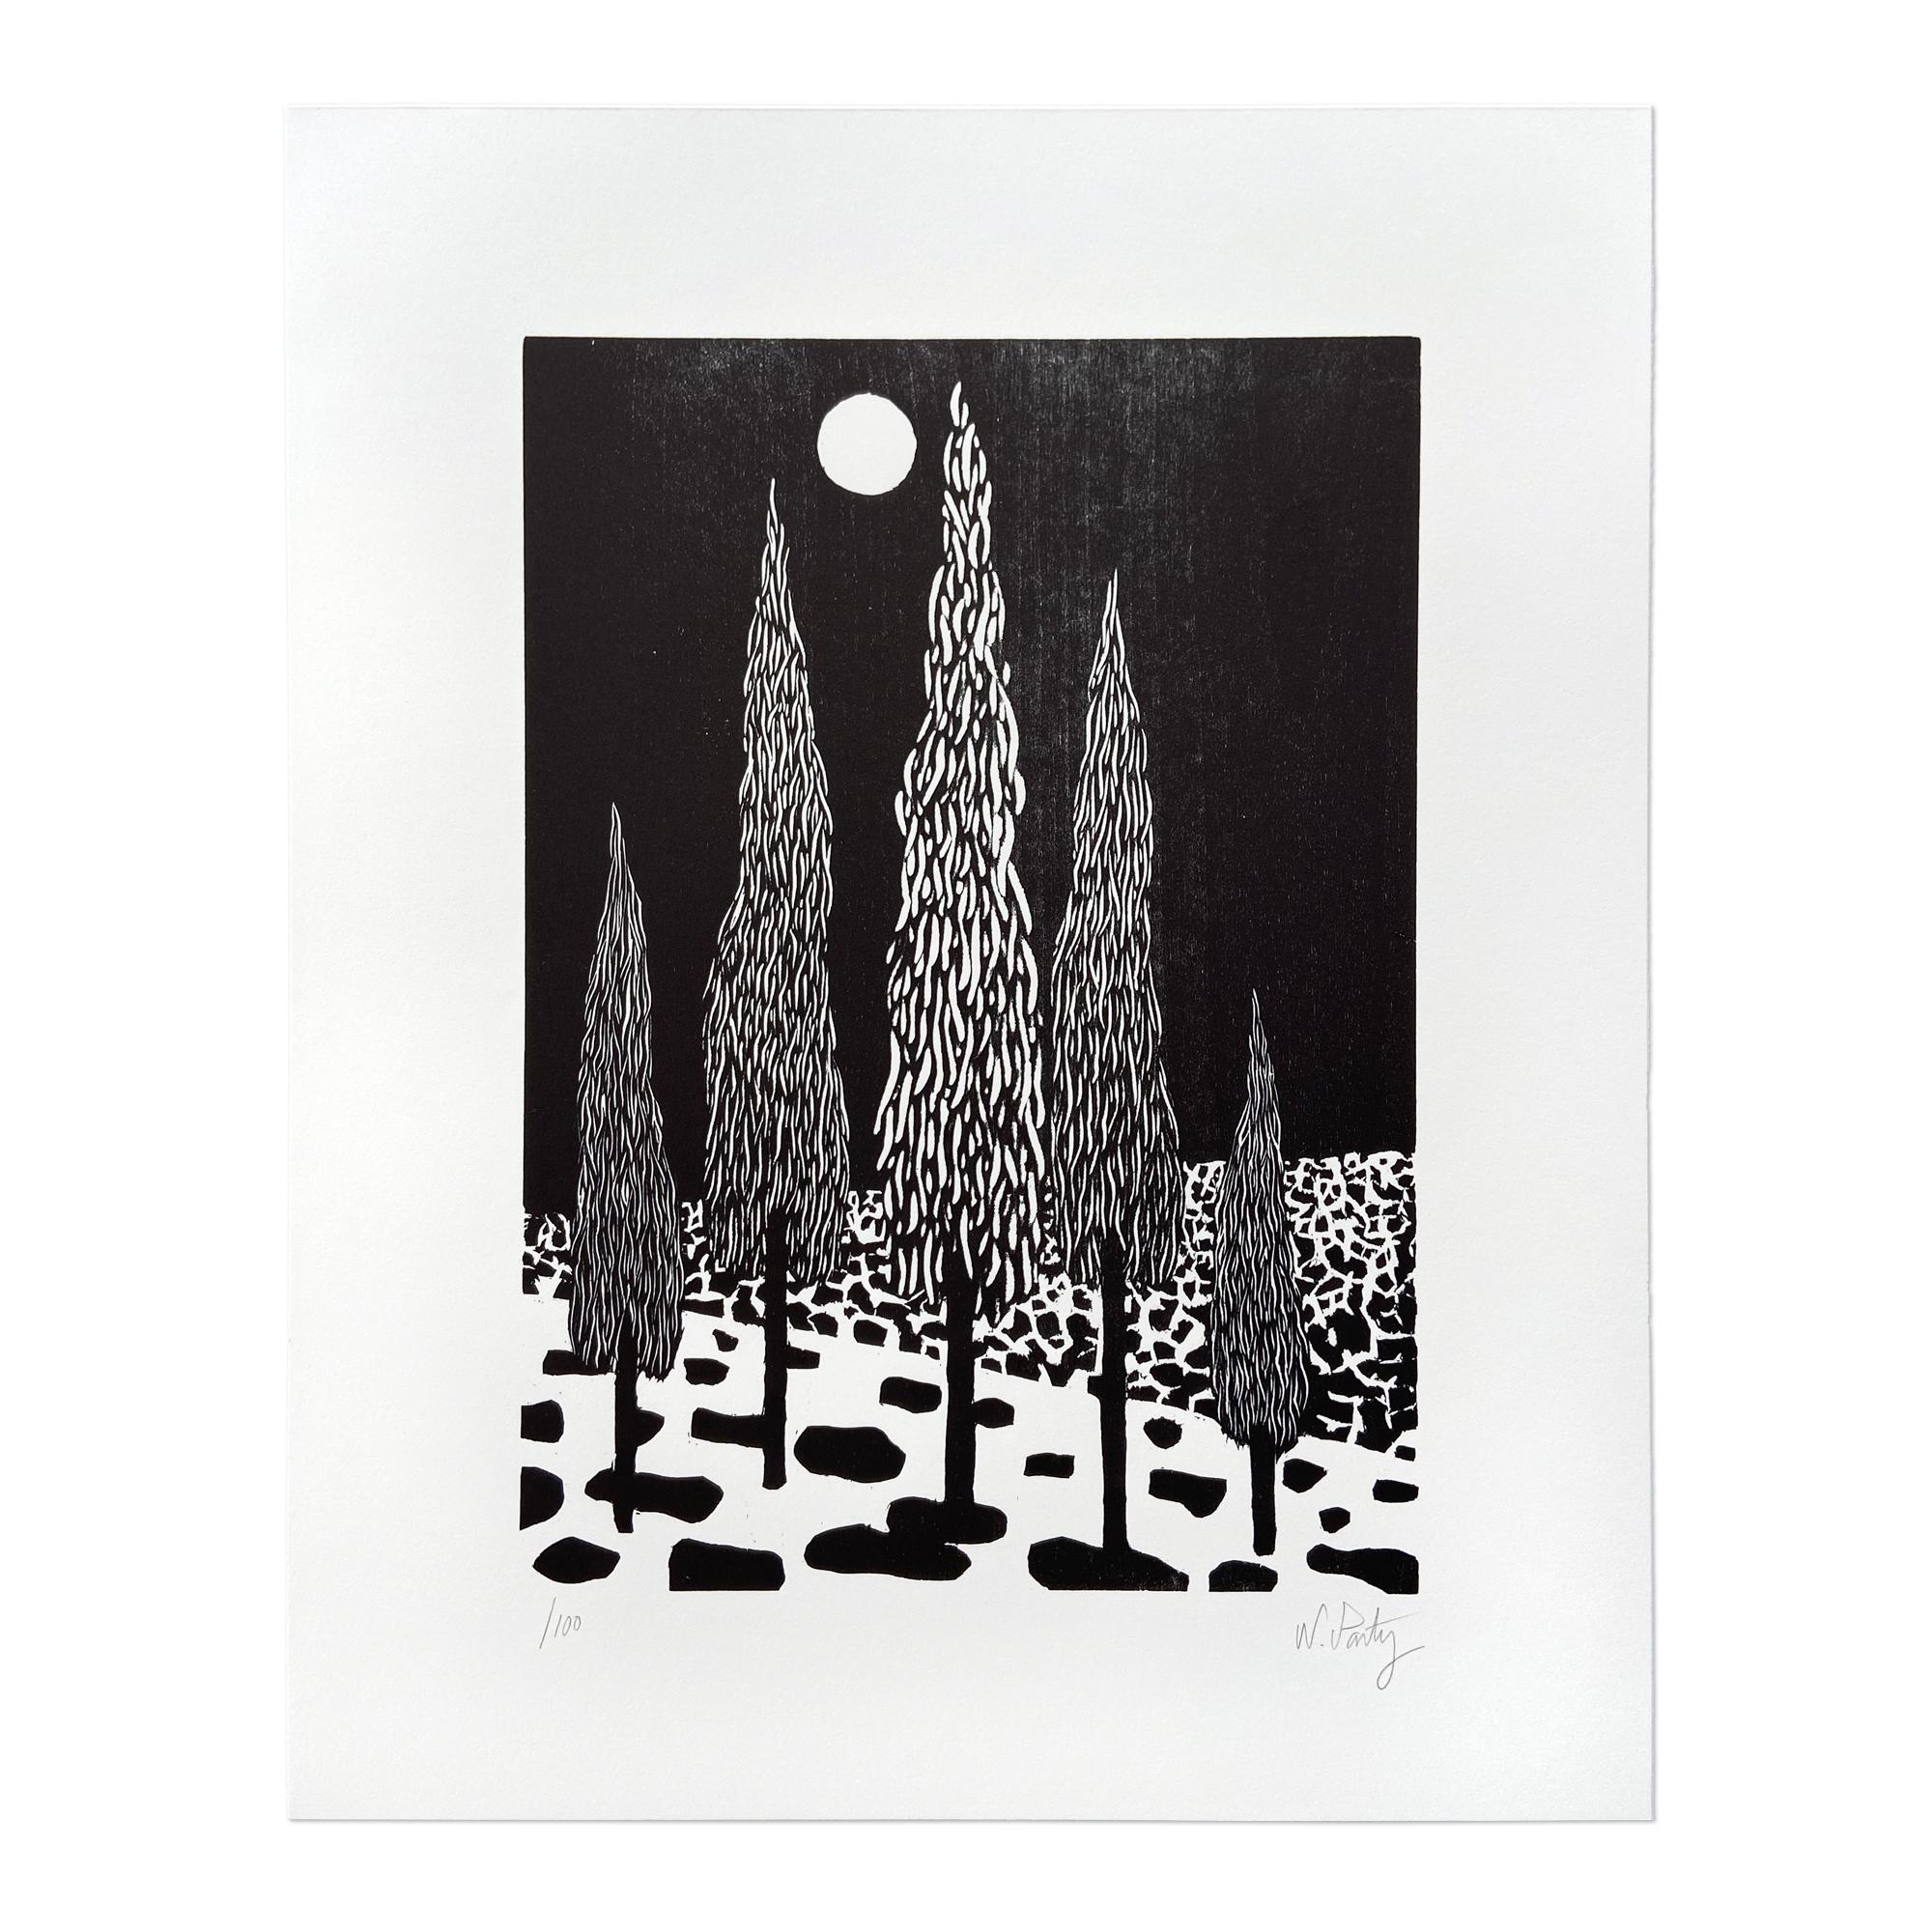 Nicolas Party Landscape Print - Trees, Woodcut on Paper, 21st Century Contemporary Art